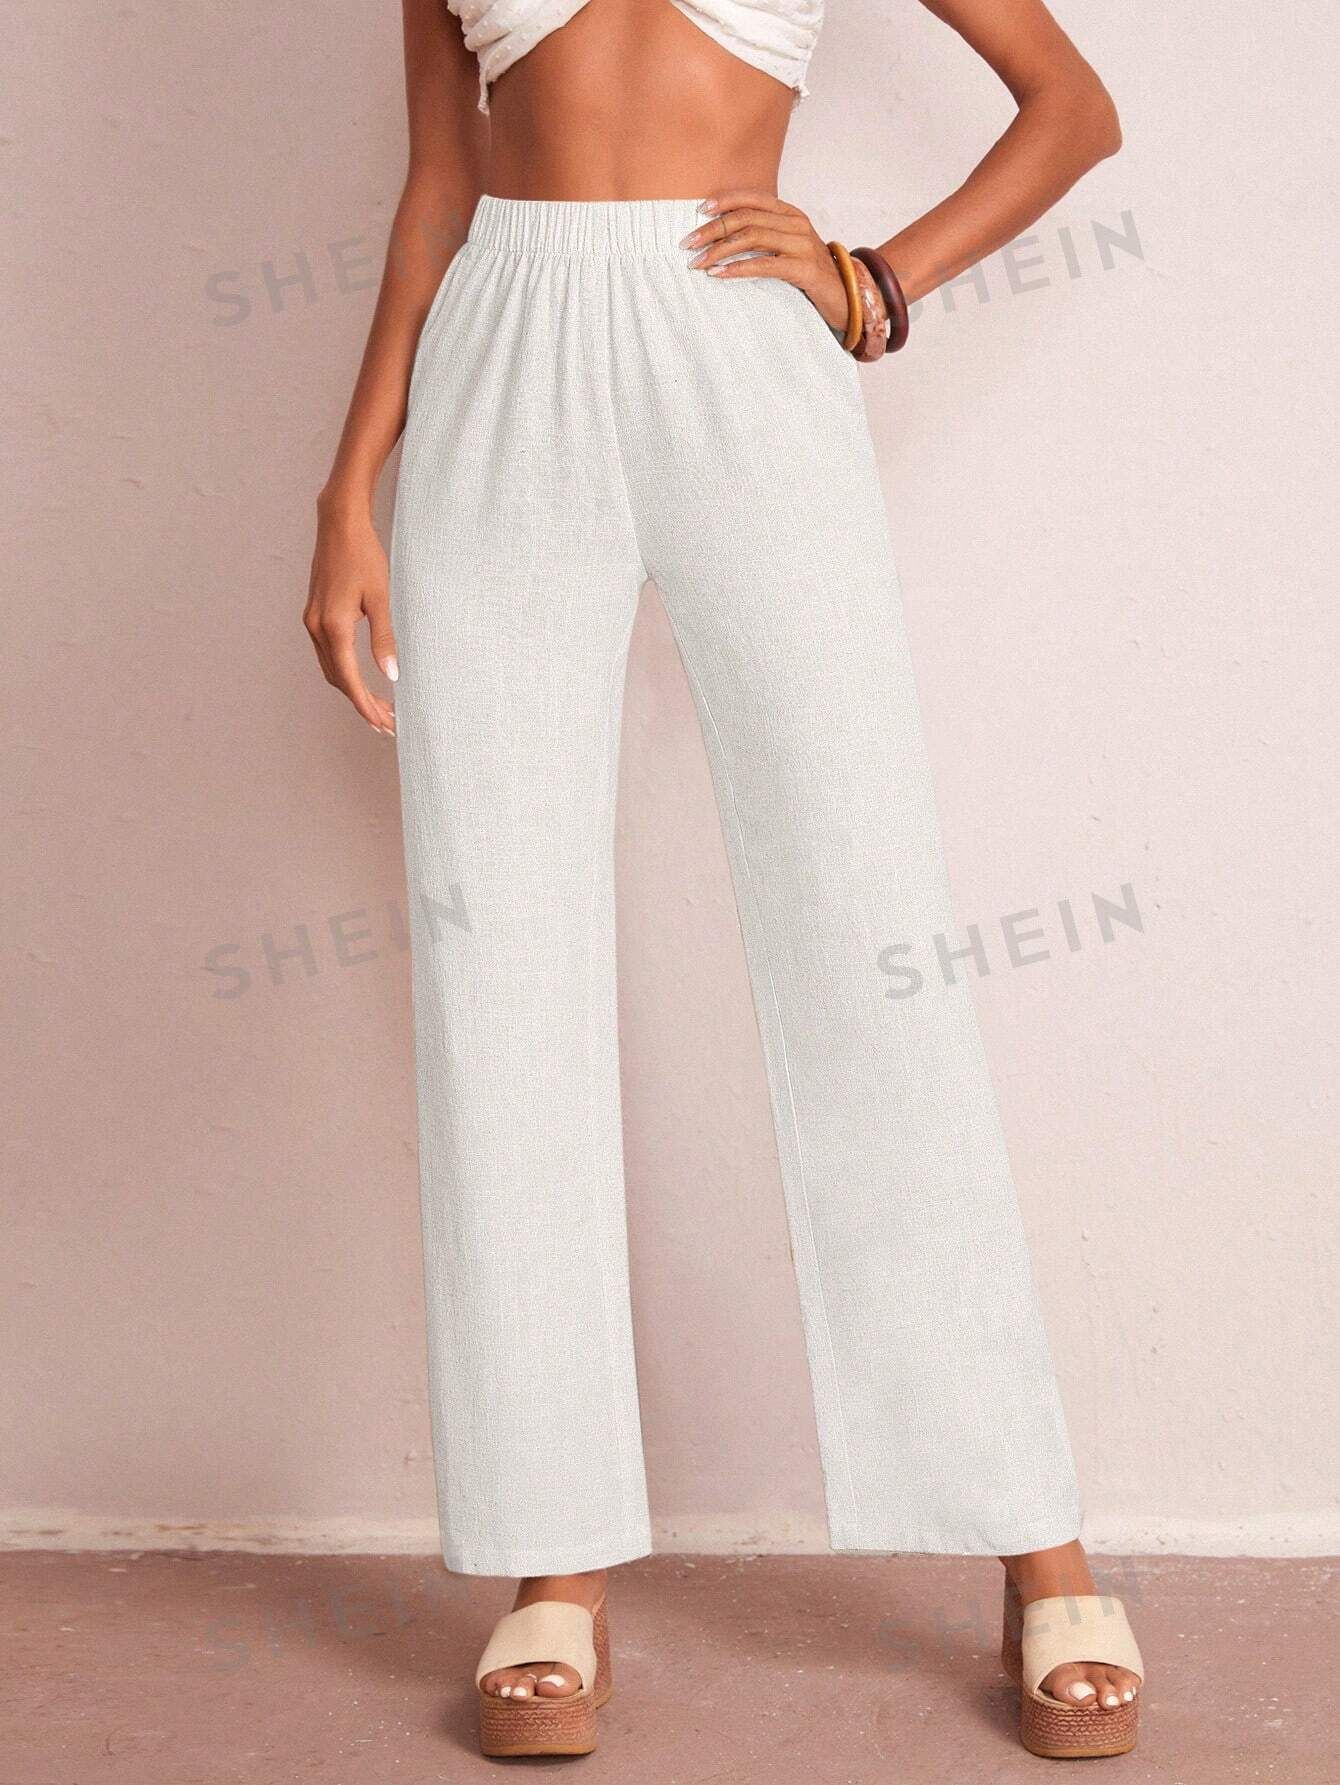 SHEIN LUNE Solid Elastic Waist Pants | SHEIN